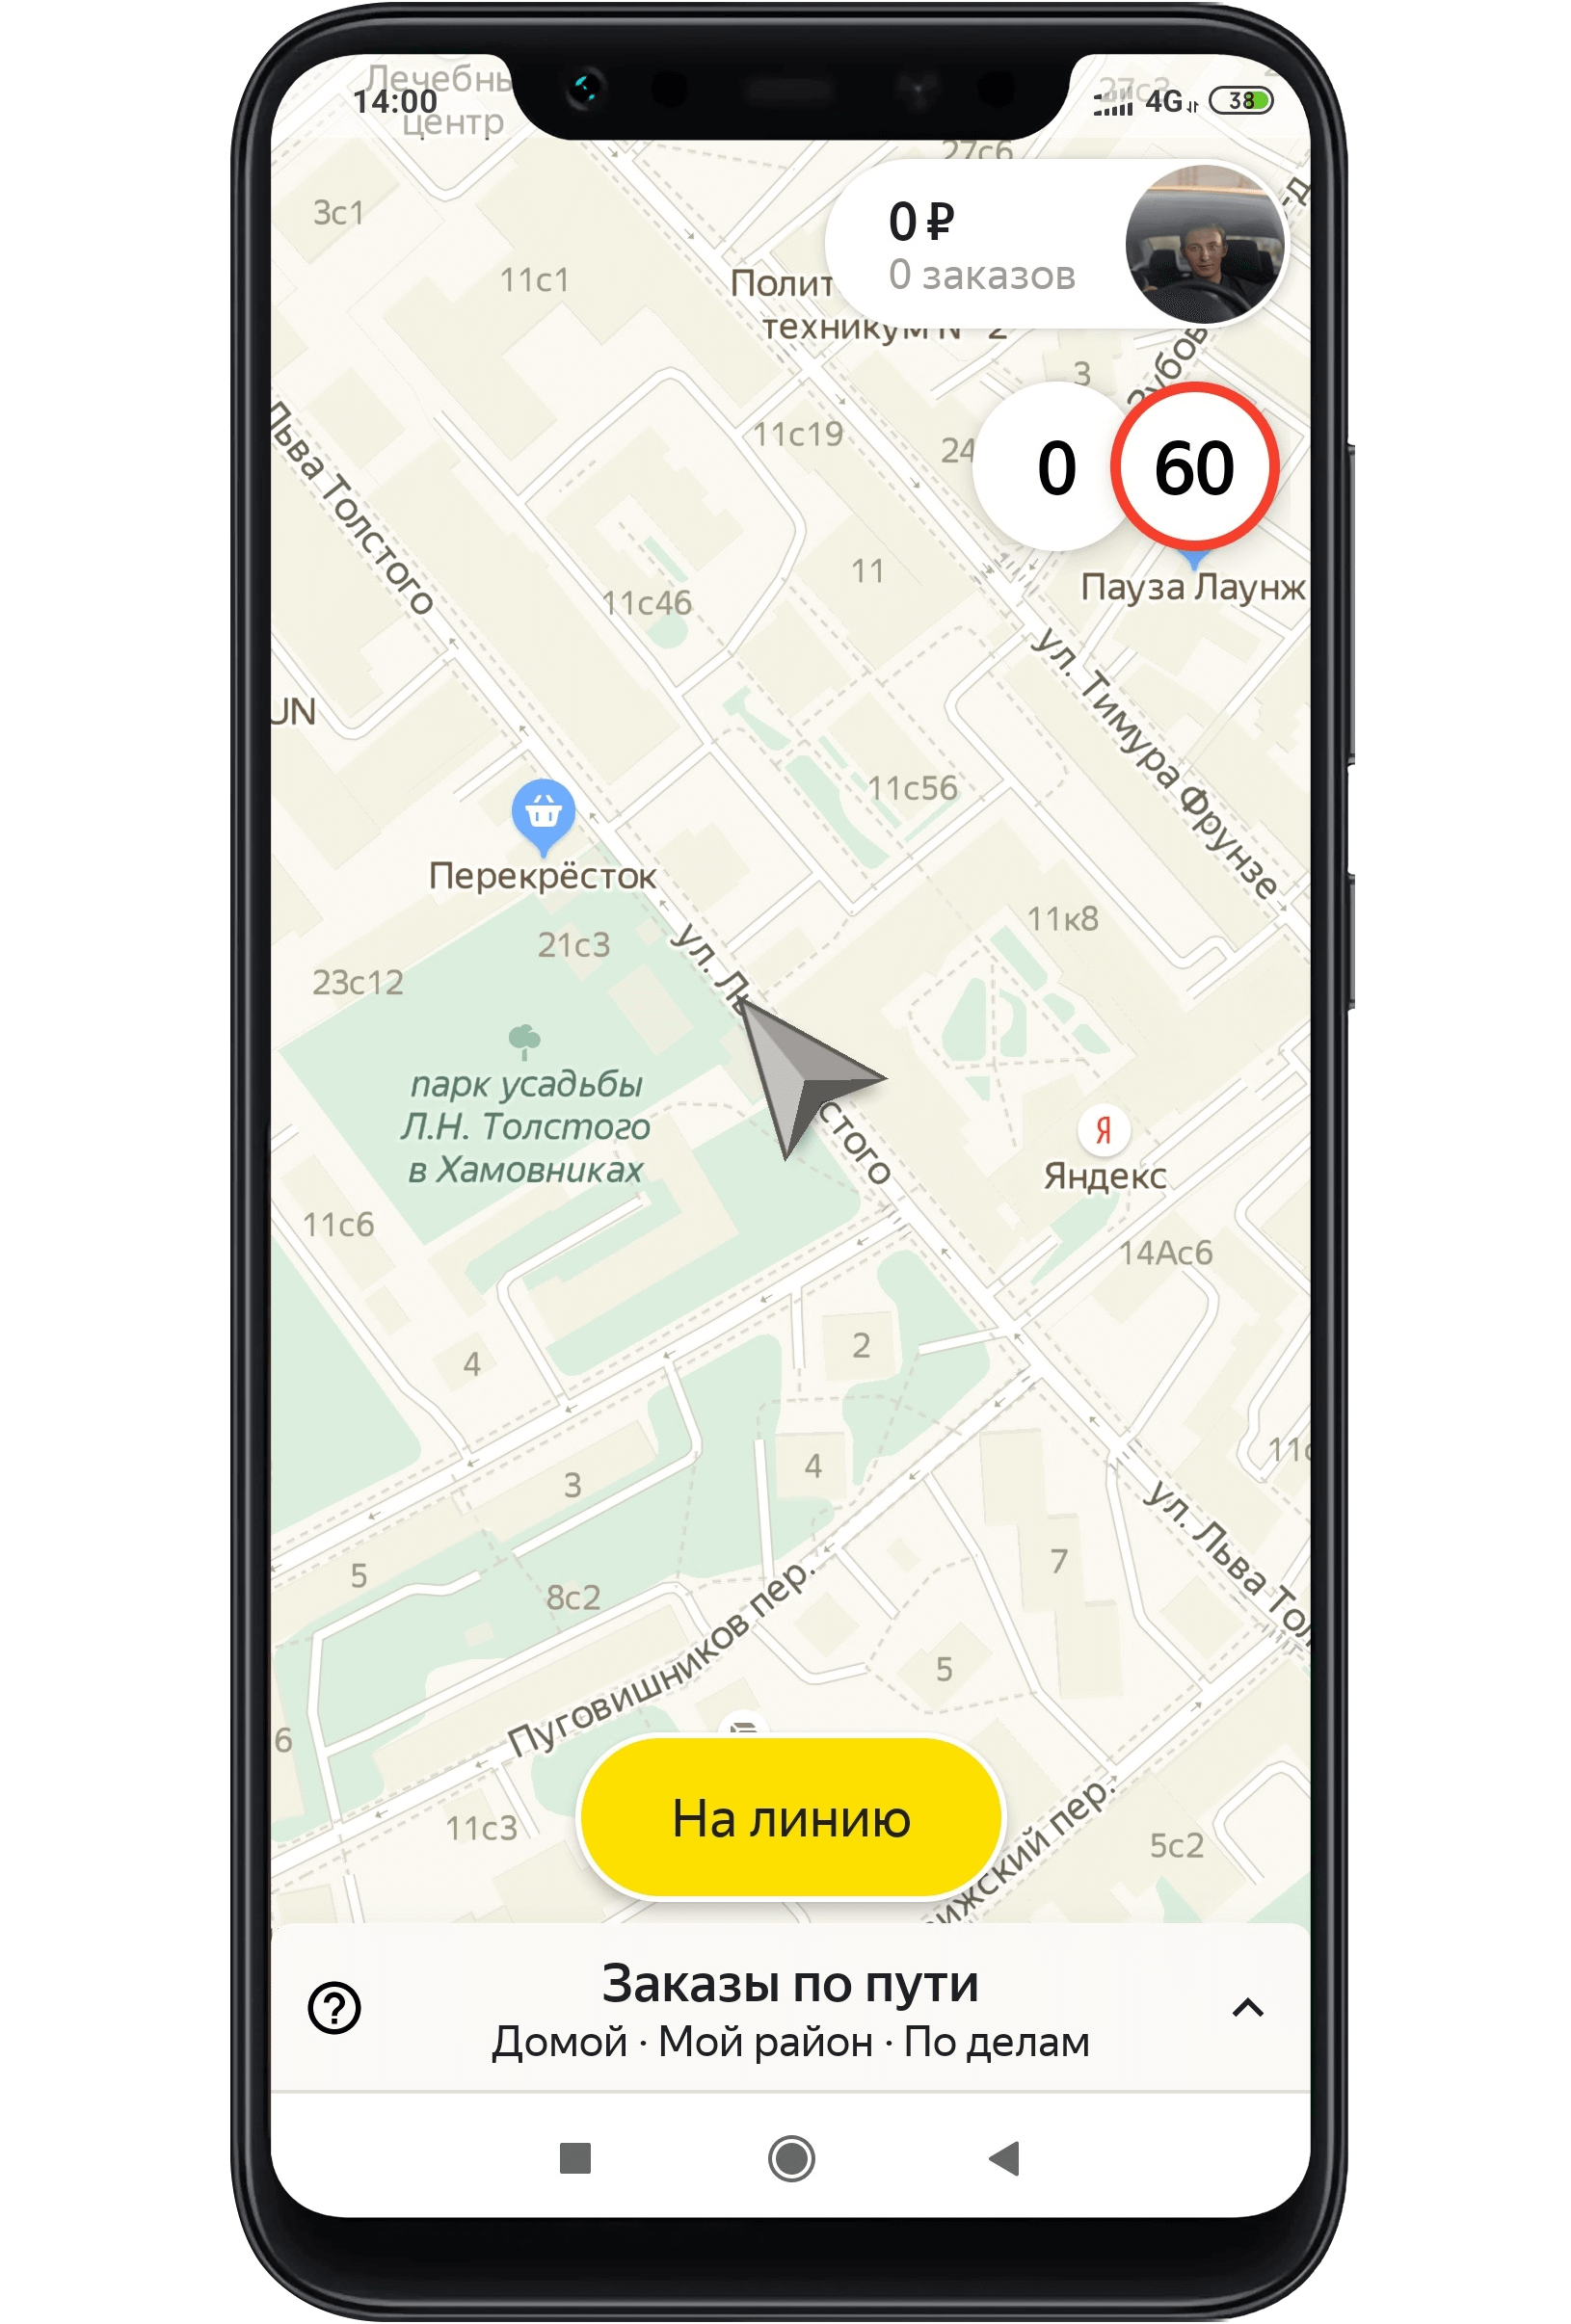 Правила яндекса для водителей. Таксометр приложение.